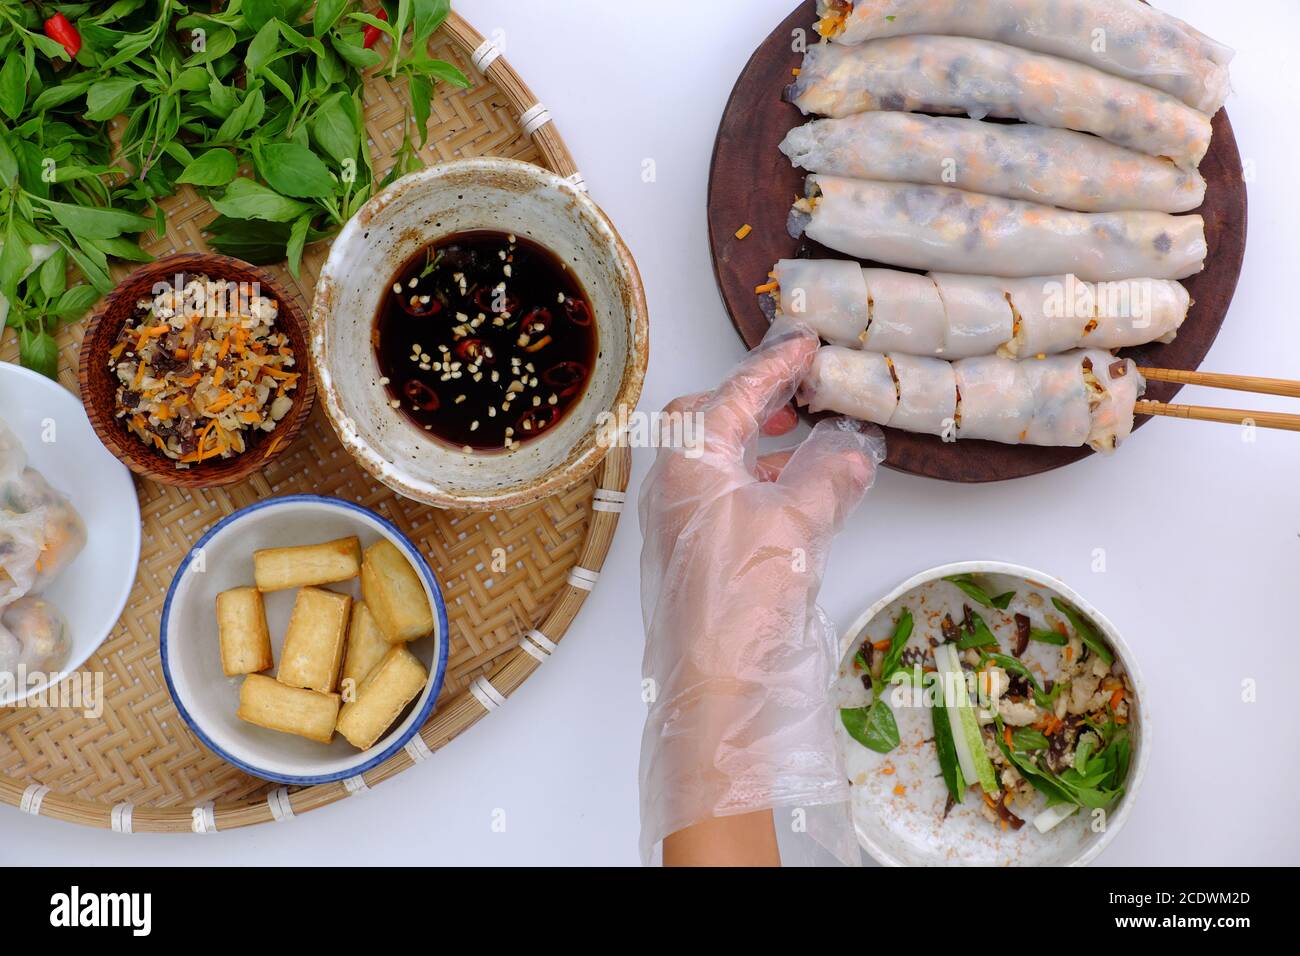 Vietnamese woman hand prepare breakfast, homemade vegan rice noodles roll from rice batter, mushroom, tofu, delicious vegetarian stuffed dish Stock Photo